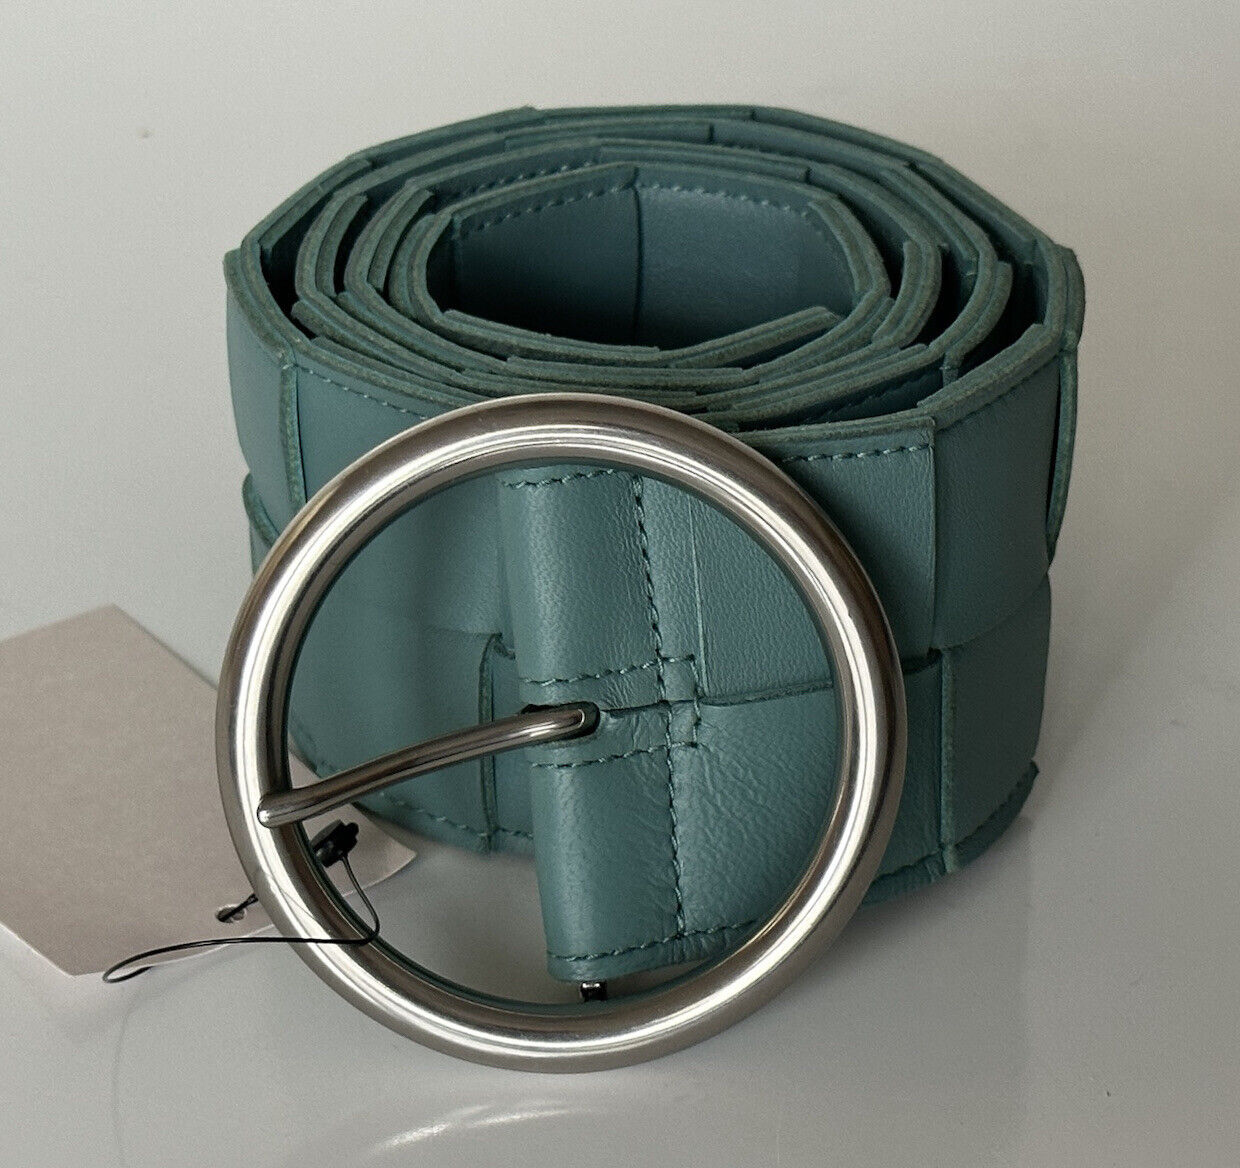 NWT $850 Bottega Veneta Intrecciato Nappa Leather Green Belt 36/90 IT 577933